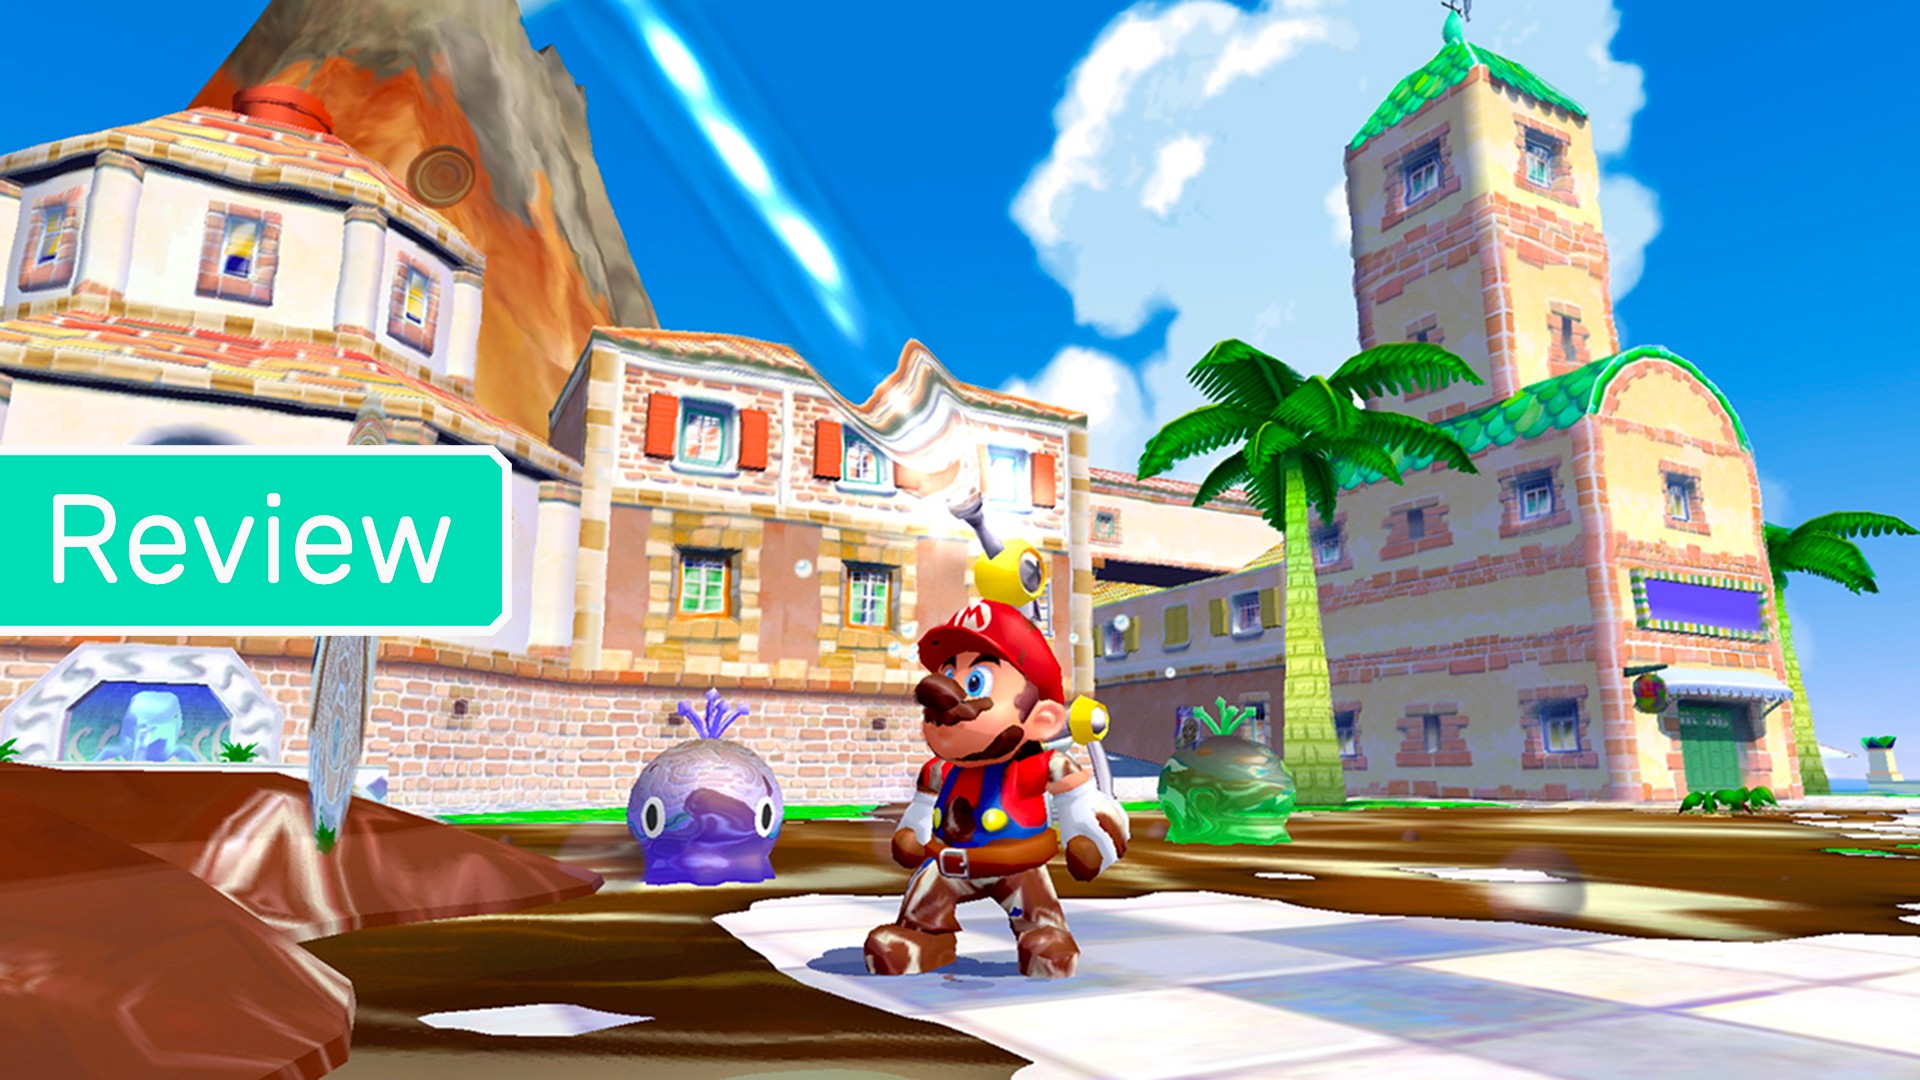 Super Mario 3D All-Stars release was manufactured FOMO says developer